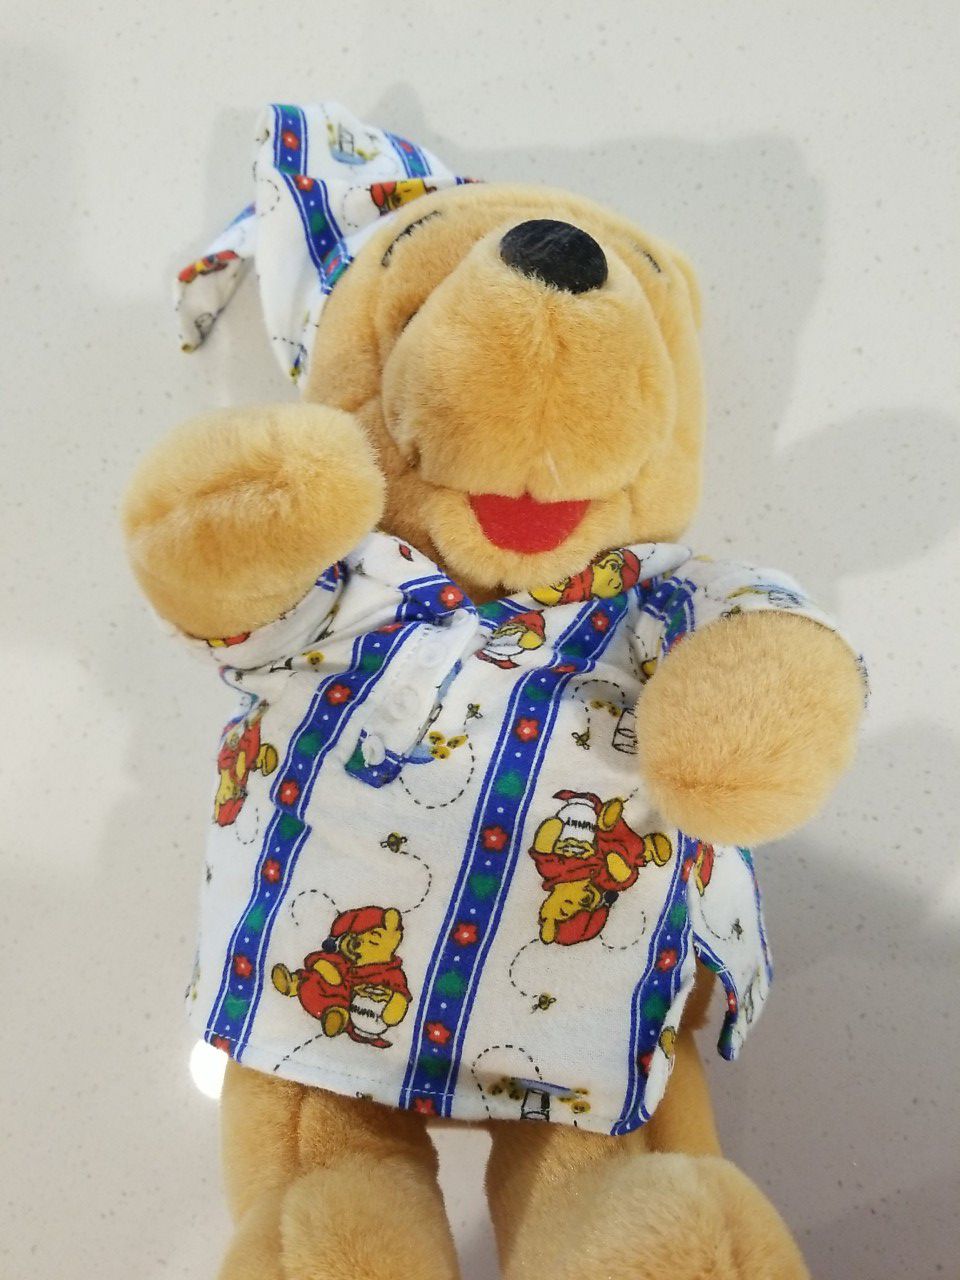 Disney Bedtime Winnie The Pooh Teddy Bear Plush in Pajamas